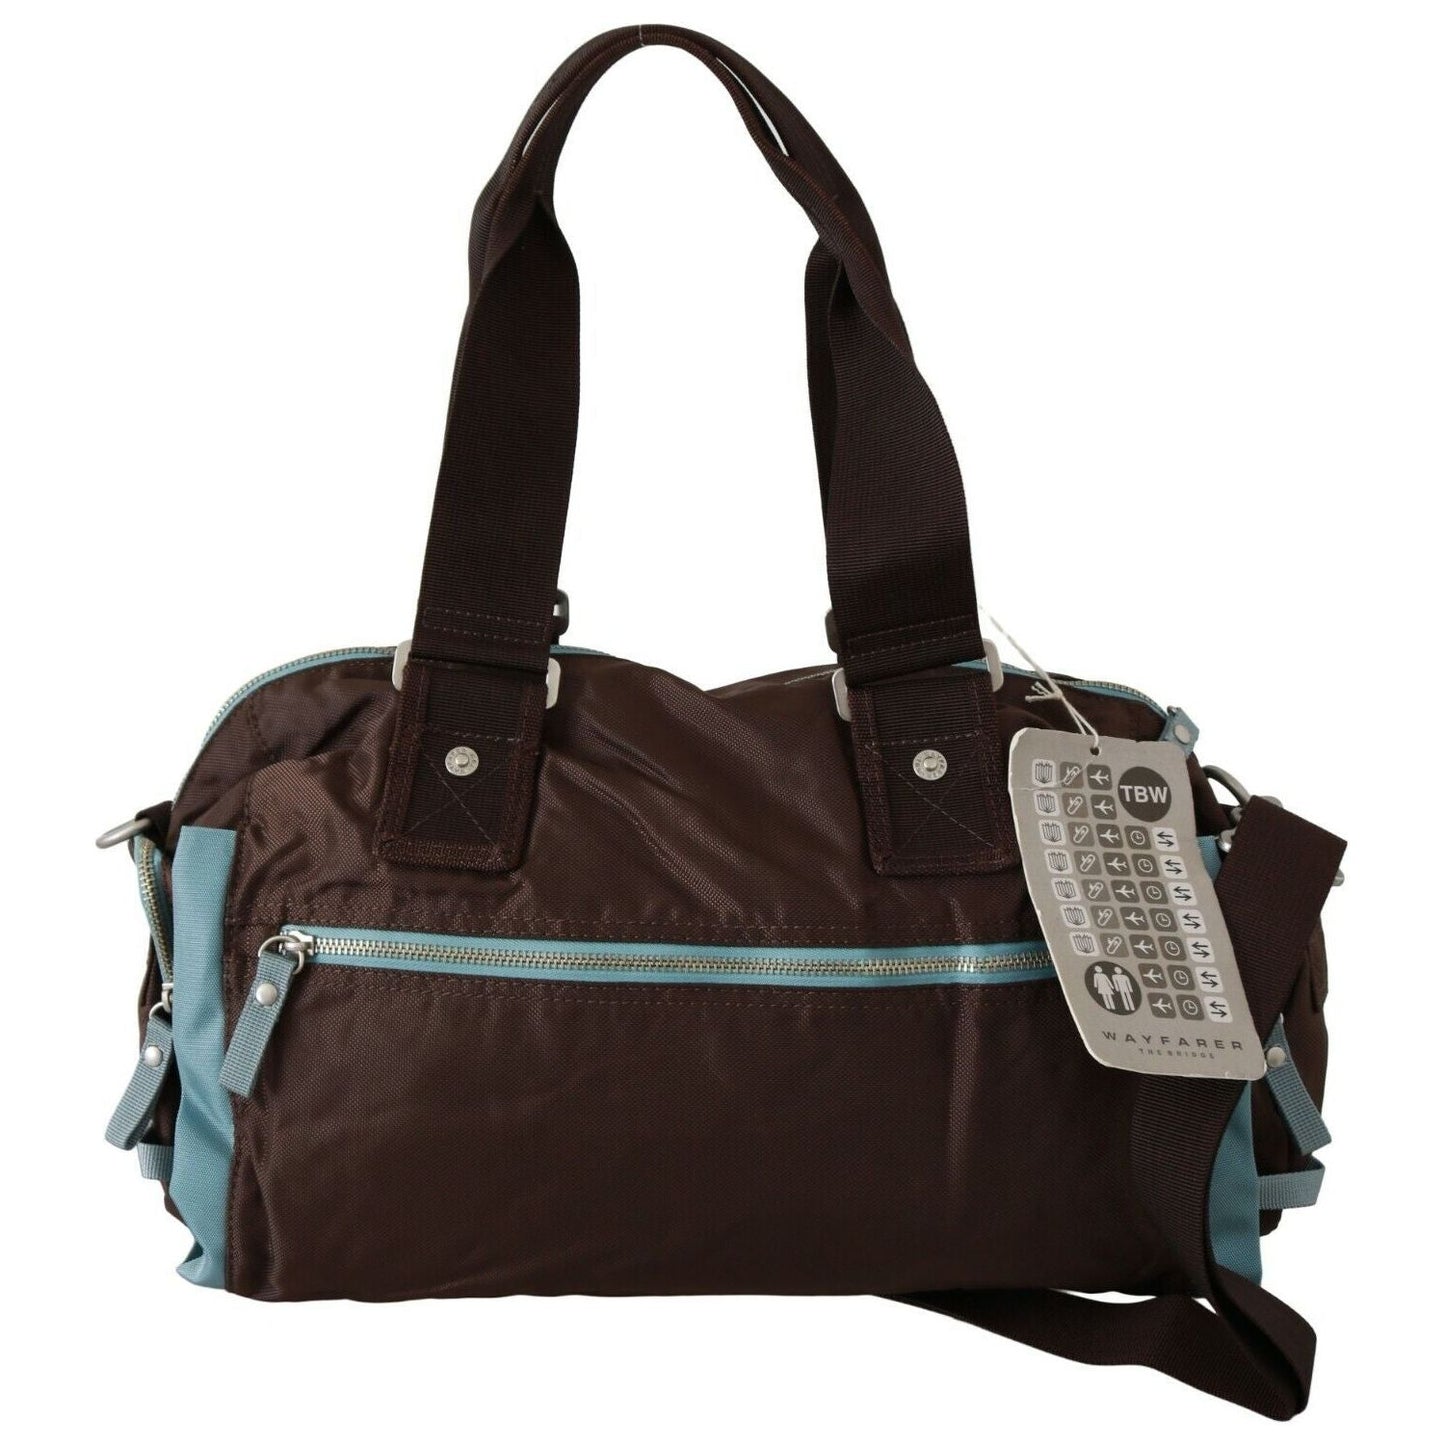 WAYFARER Elegant Duffel Travel Bag in Earthy Brown Luggage brown-handbag-duffel-travel-purse s-l1600-17-1-acb85ea7-be5.jpg